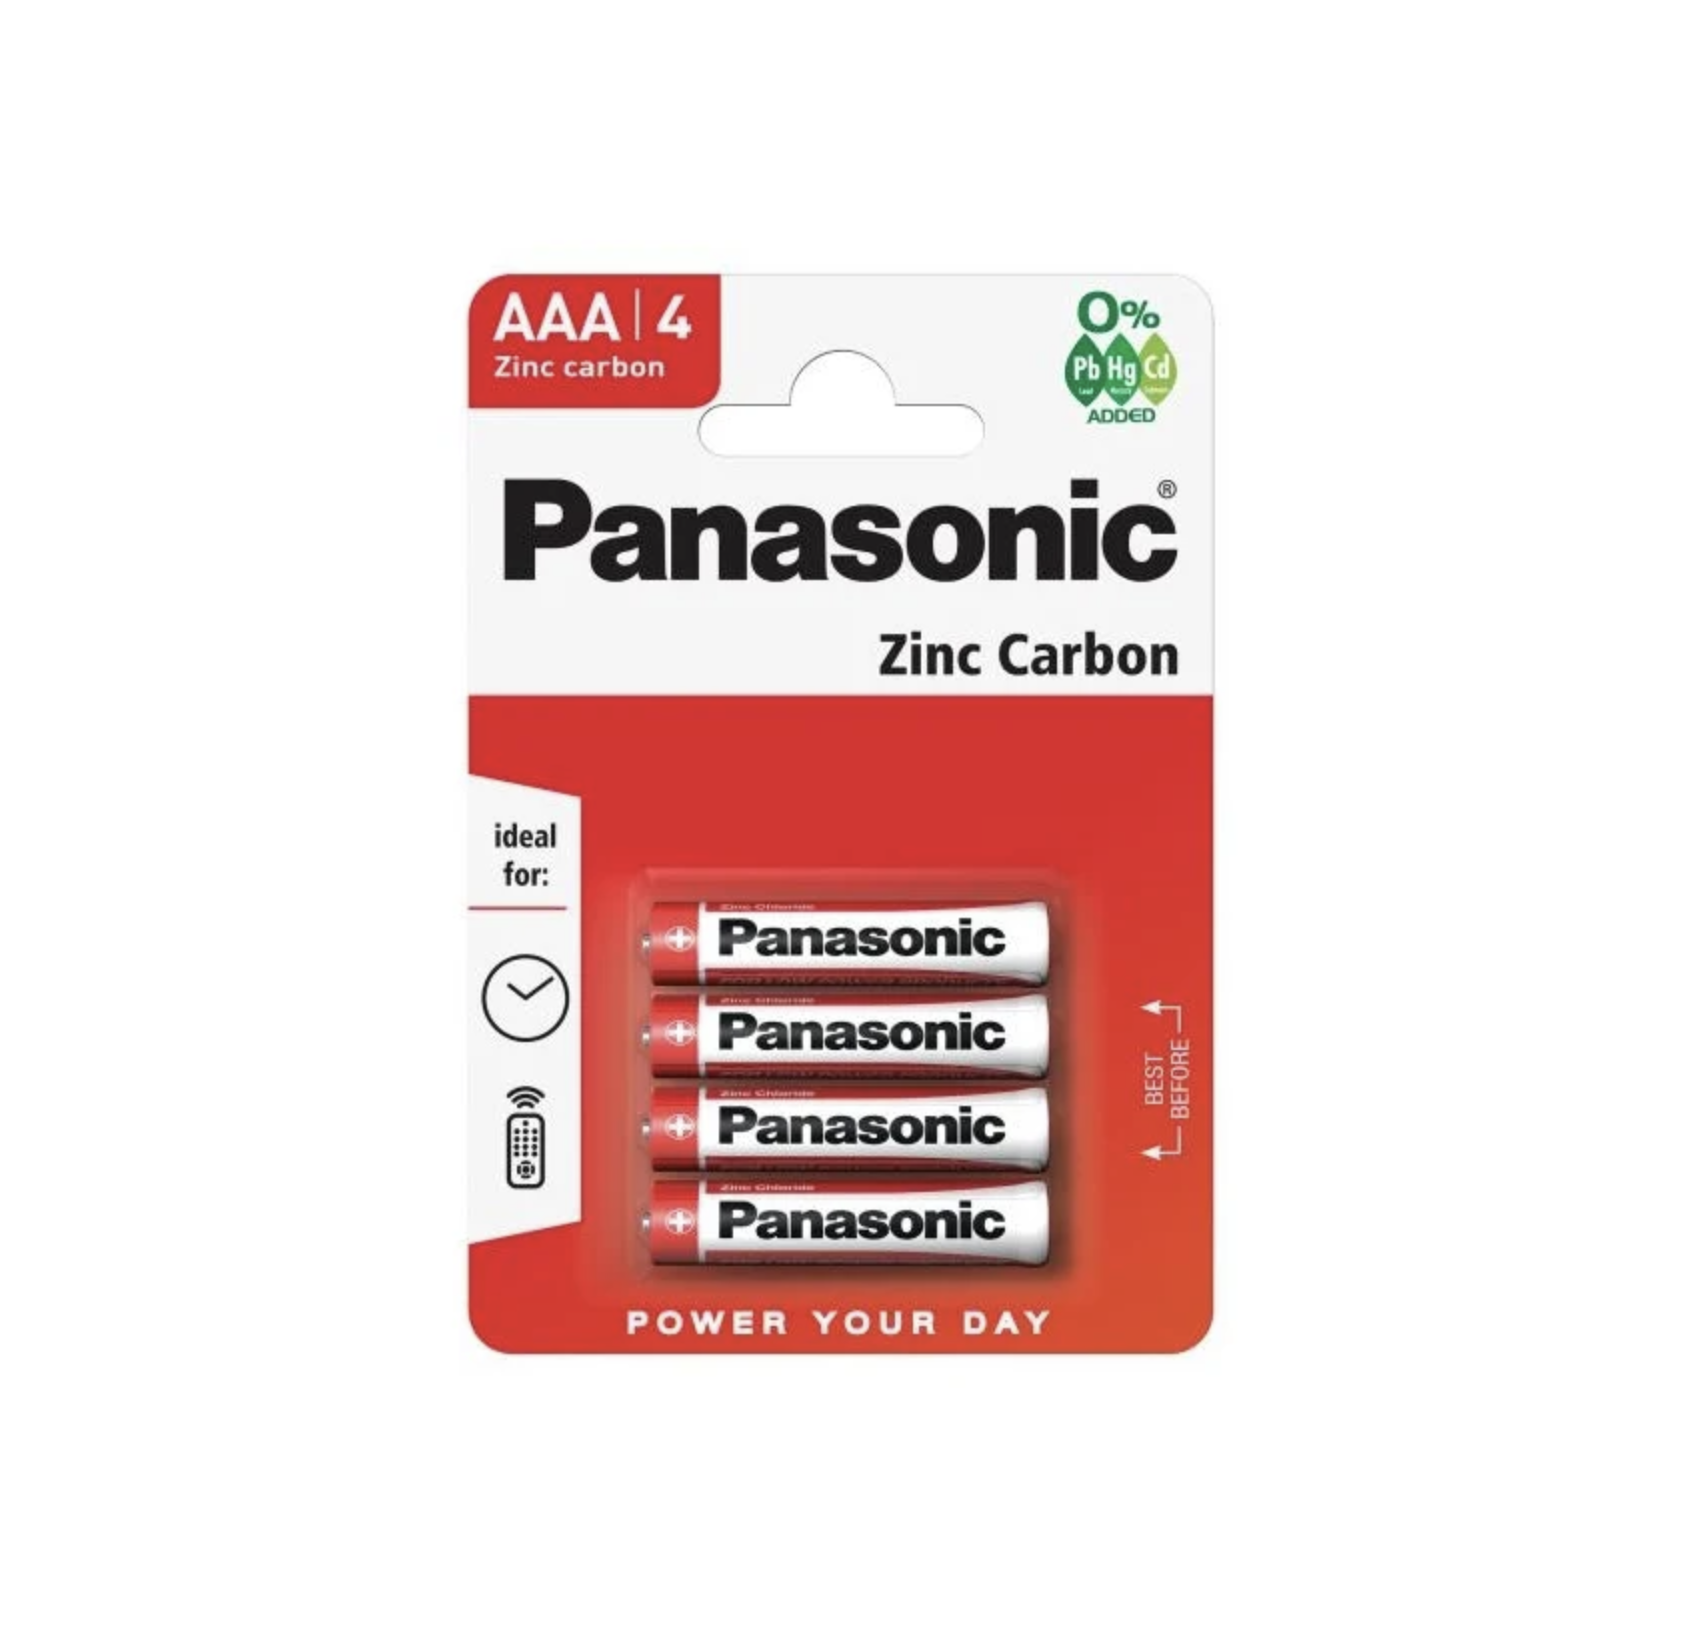   / Panasonic -   Zinc Carbon AAA R03 1,5V 4 